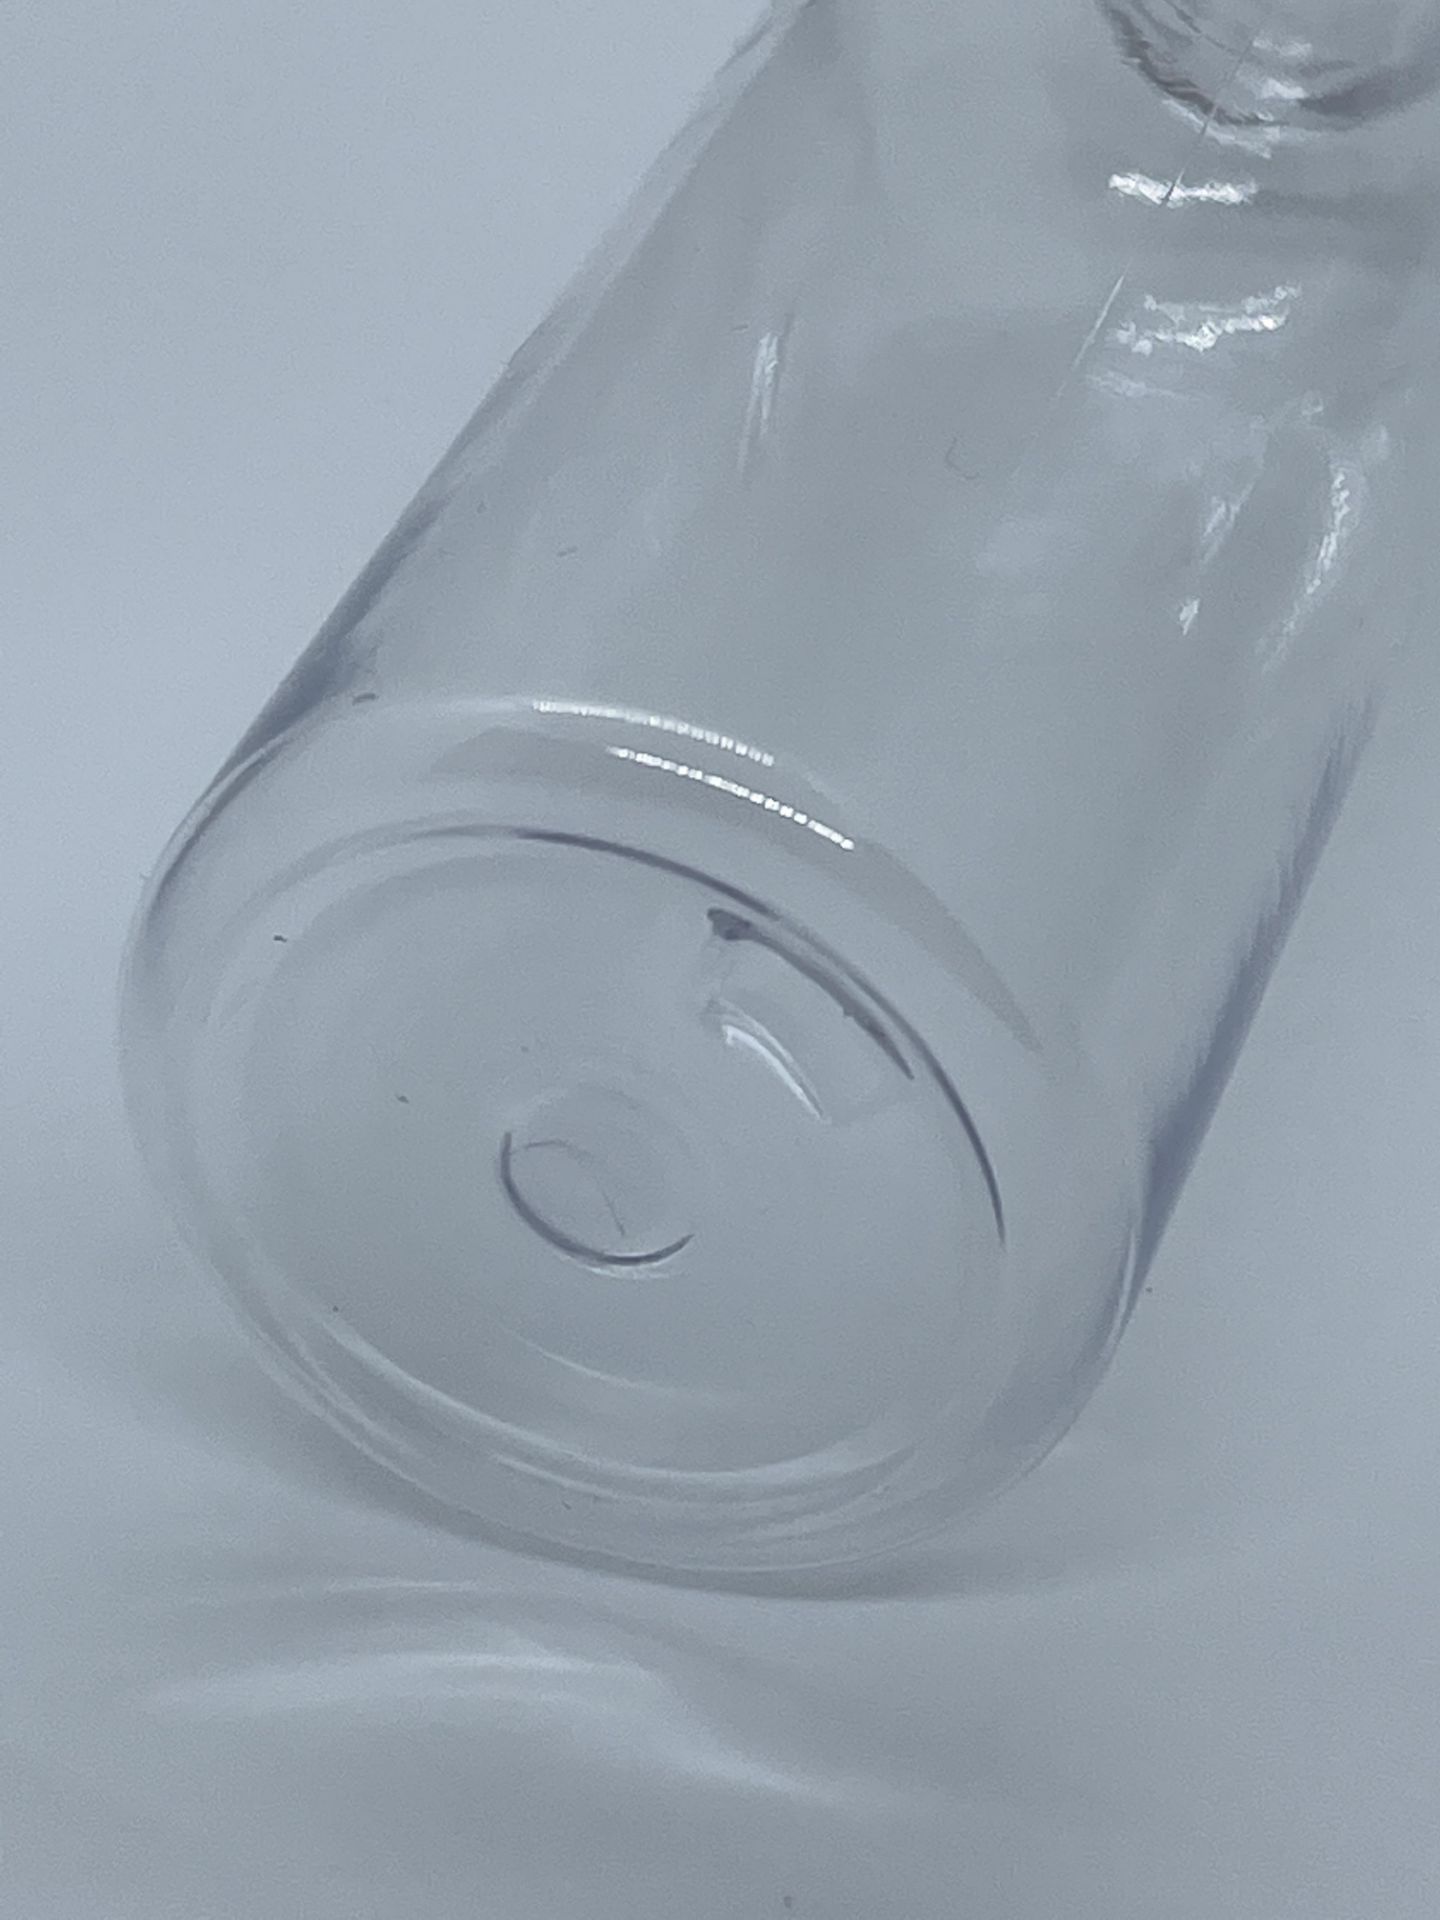 96,000 - Clear Plastic Bullet 4 oz Empty Bottles, 24-410 Threading Neck, 5" Tall, 1 5/8" Diameter - Image 4 of 4